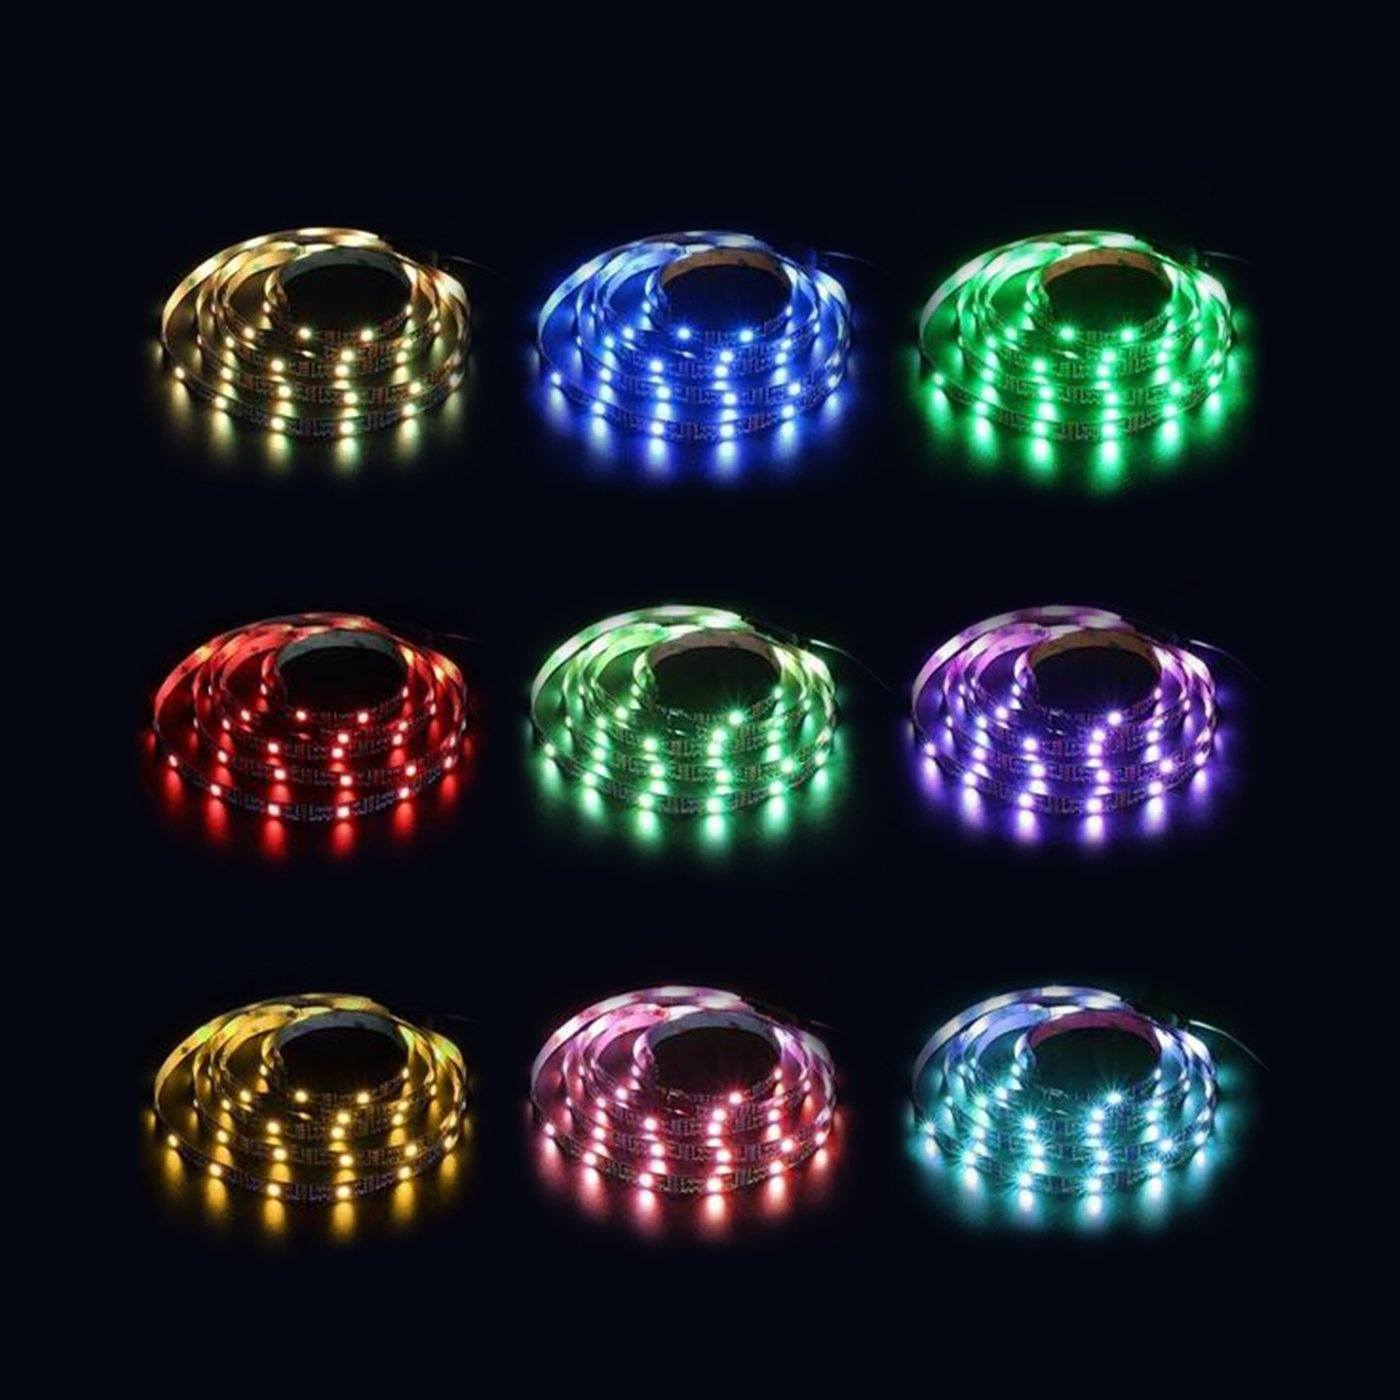 Multi-color LED Light Strip